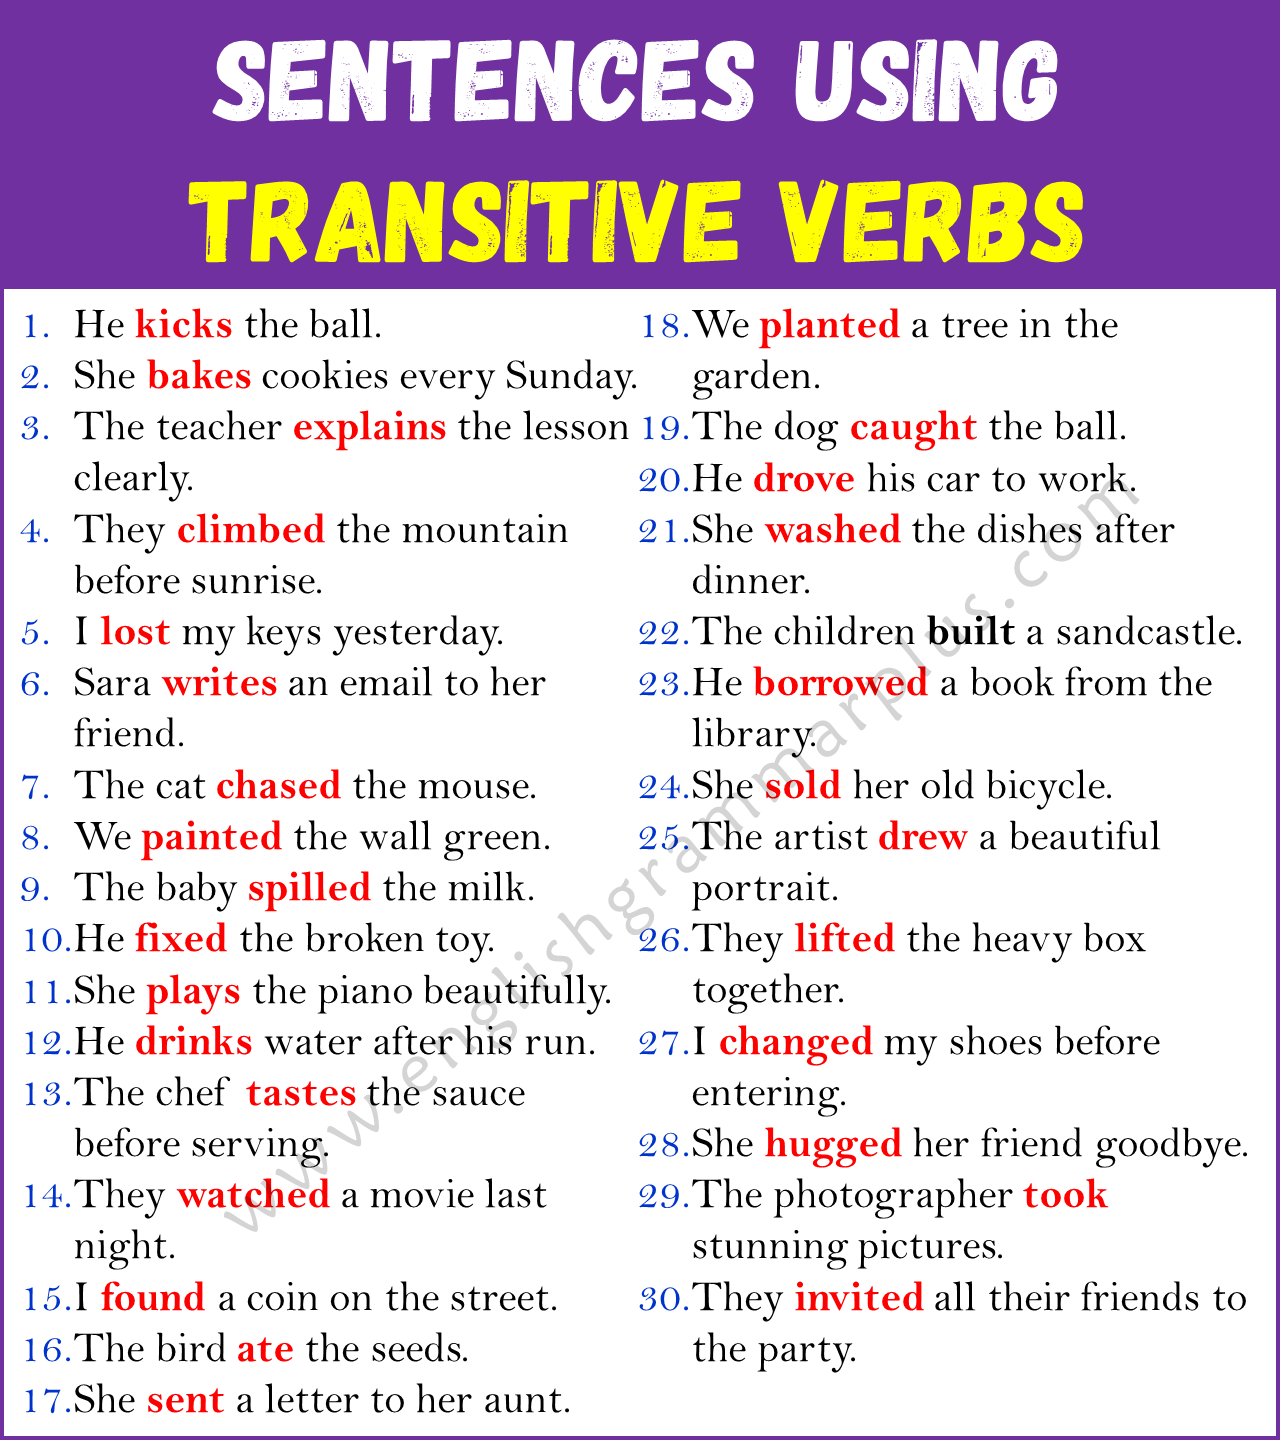 Sentences Using Transitive Verbs